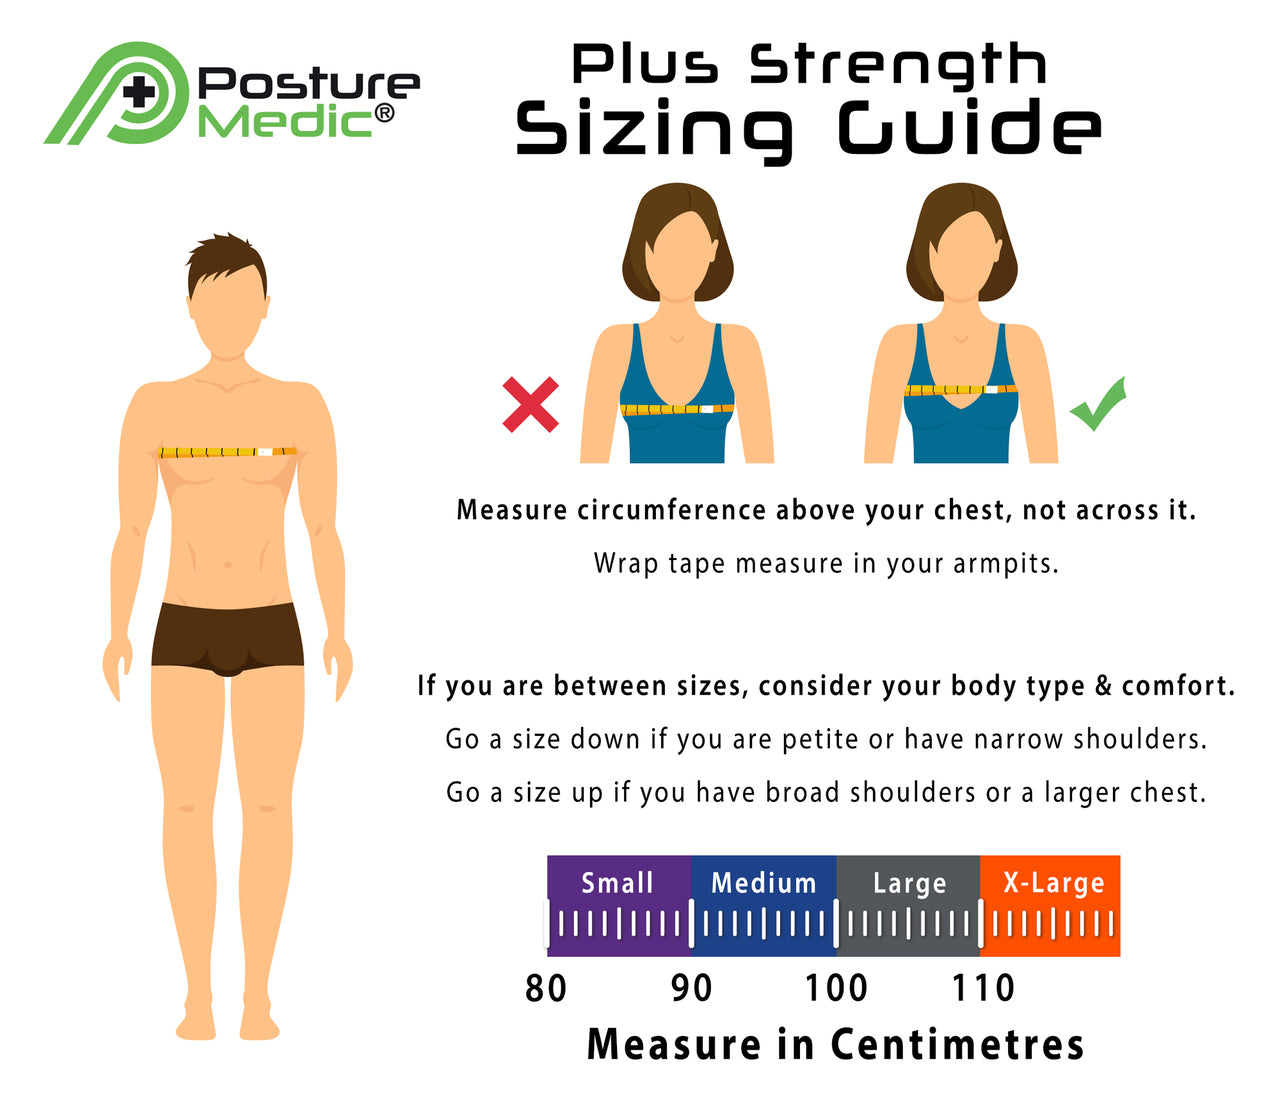 Posture Corrector  improve your health